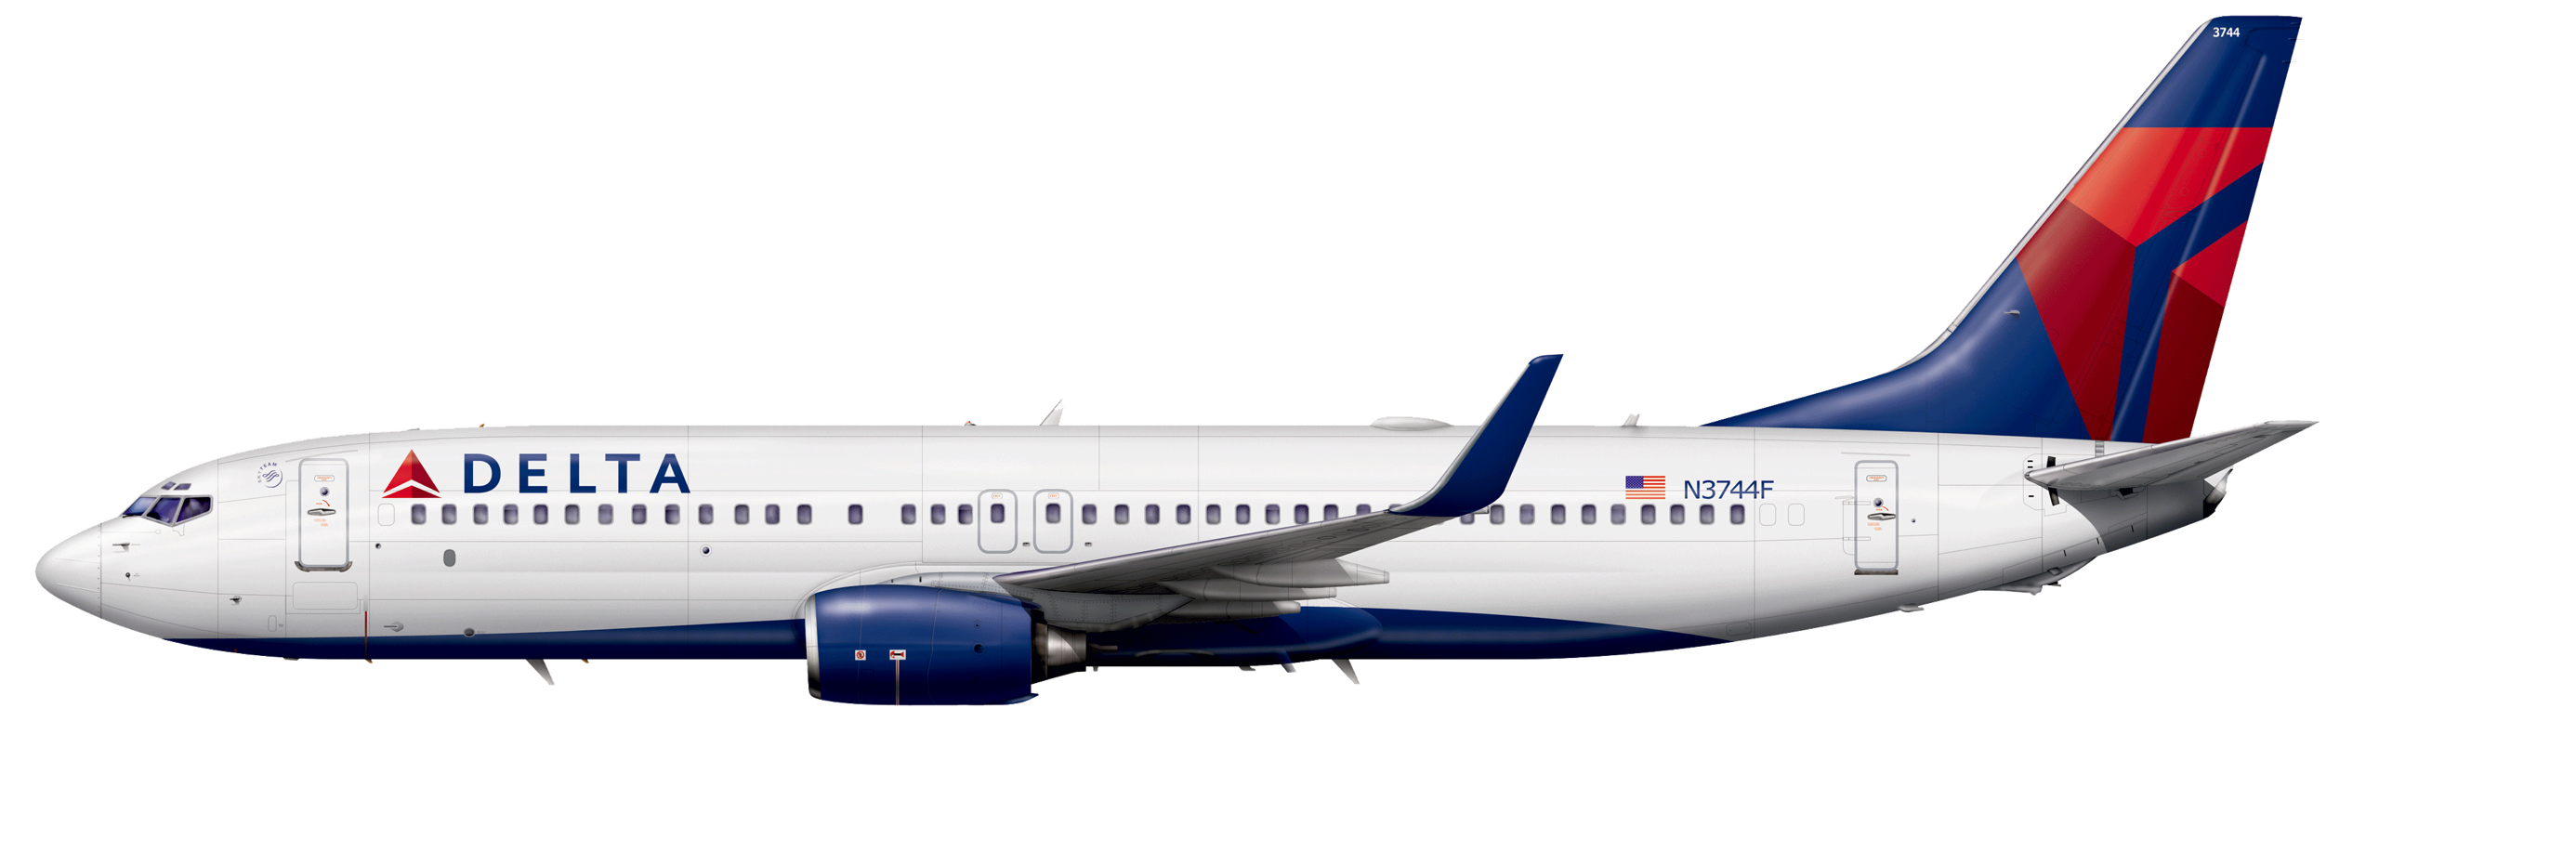 Boeing 737 800 Aircraft Seat Maps Specs Amenities Delta